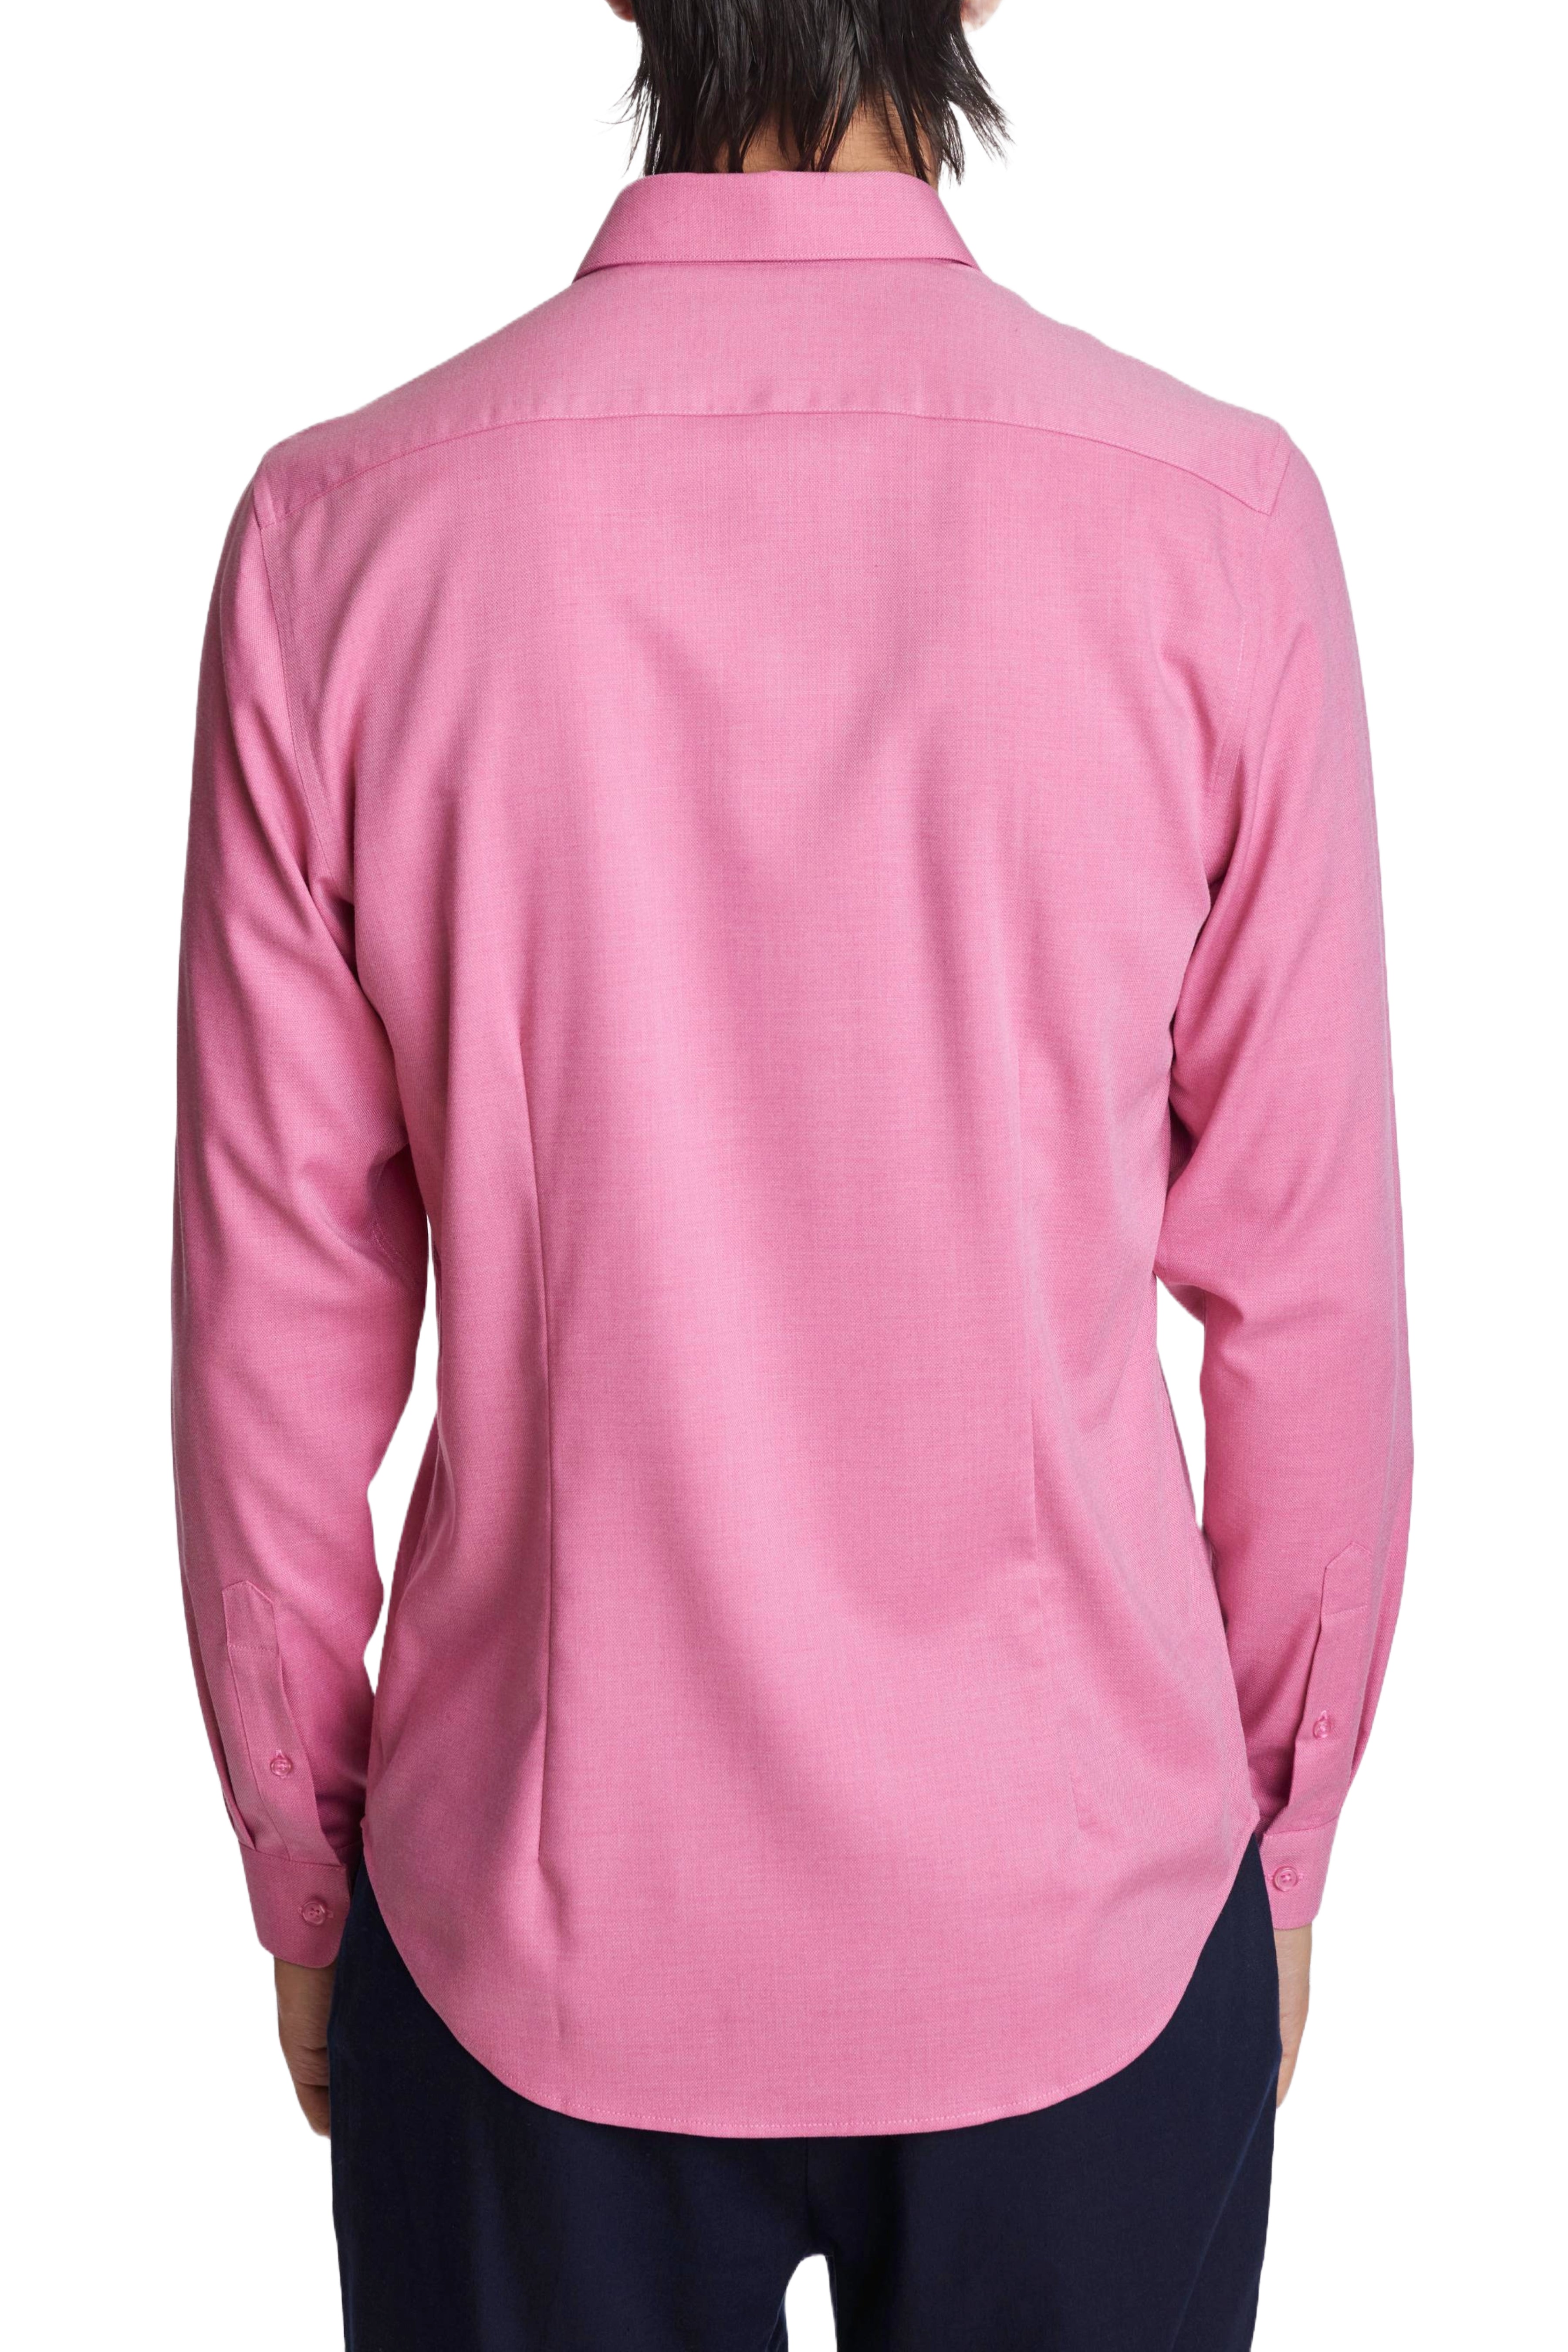 Samuel Spread Collar Shirt - Raspberry